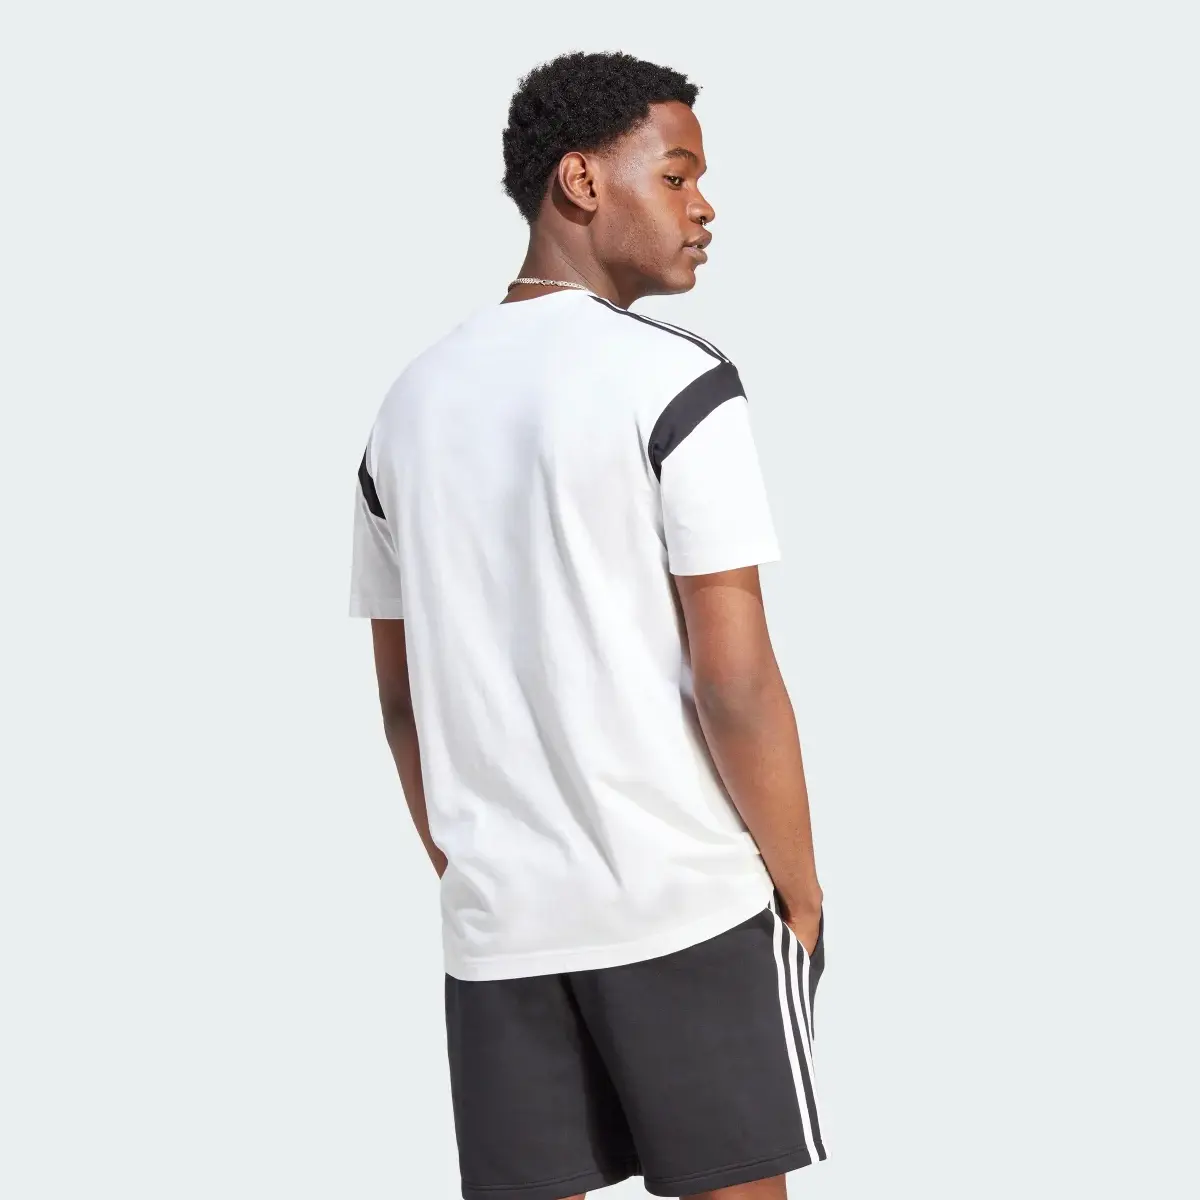 Adidas T-shirt colorblock. 3